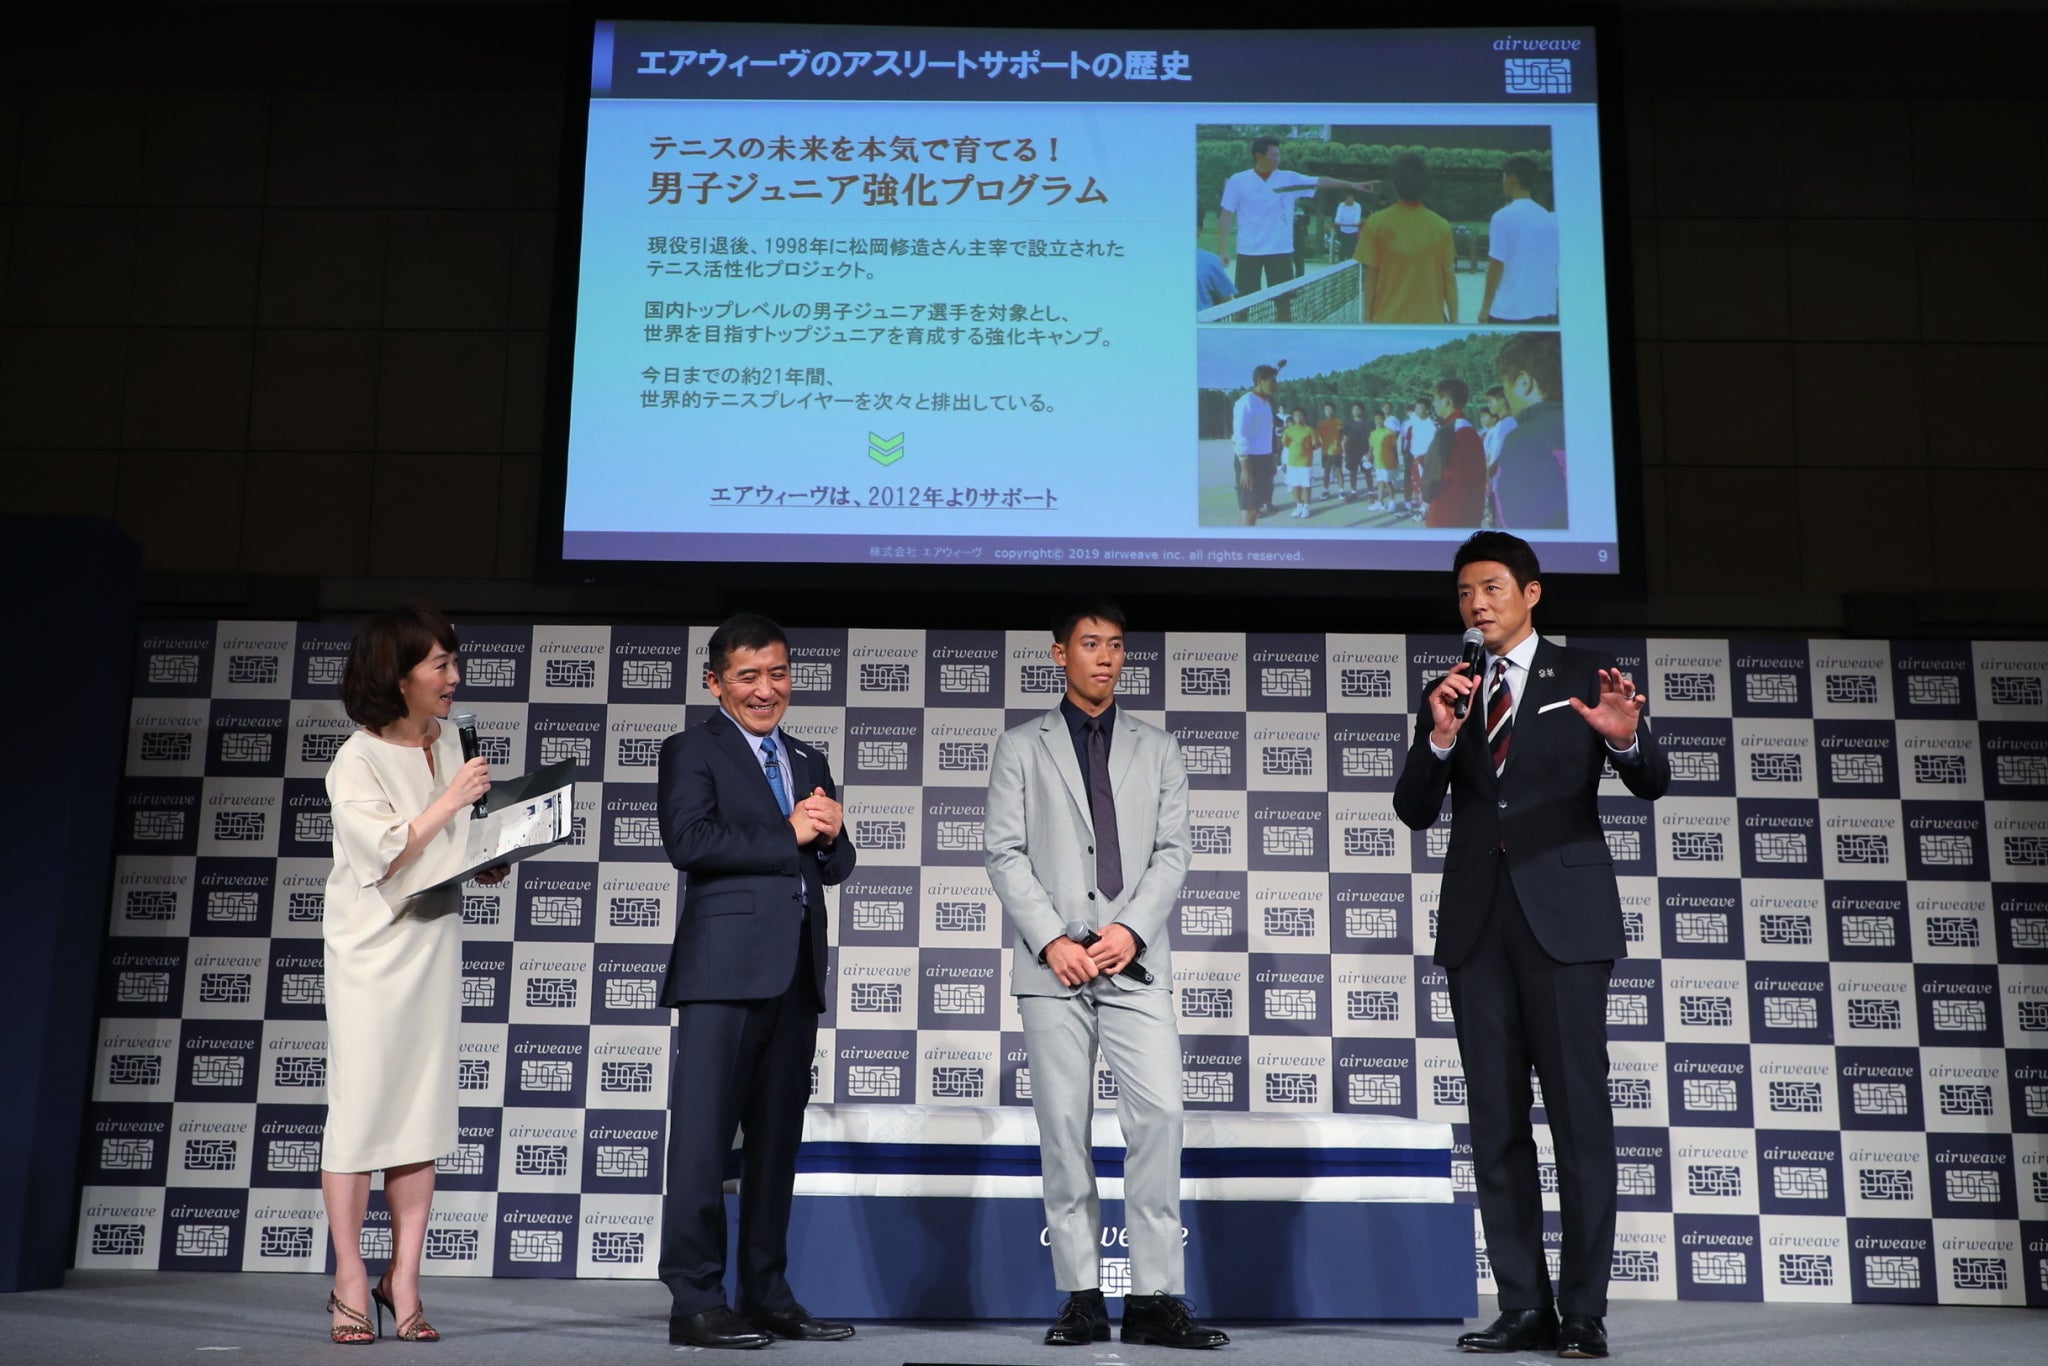 The Future of Sleep Media Event with Kei Nishikori & Shuzo Matsuoka